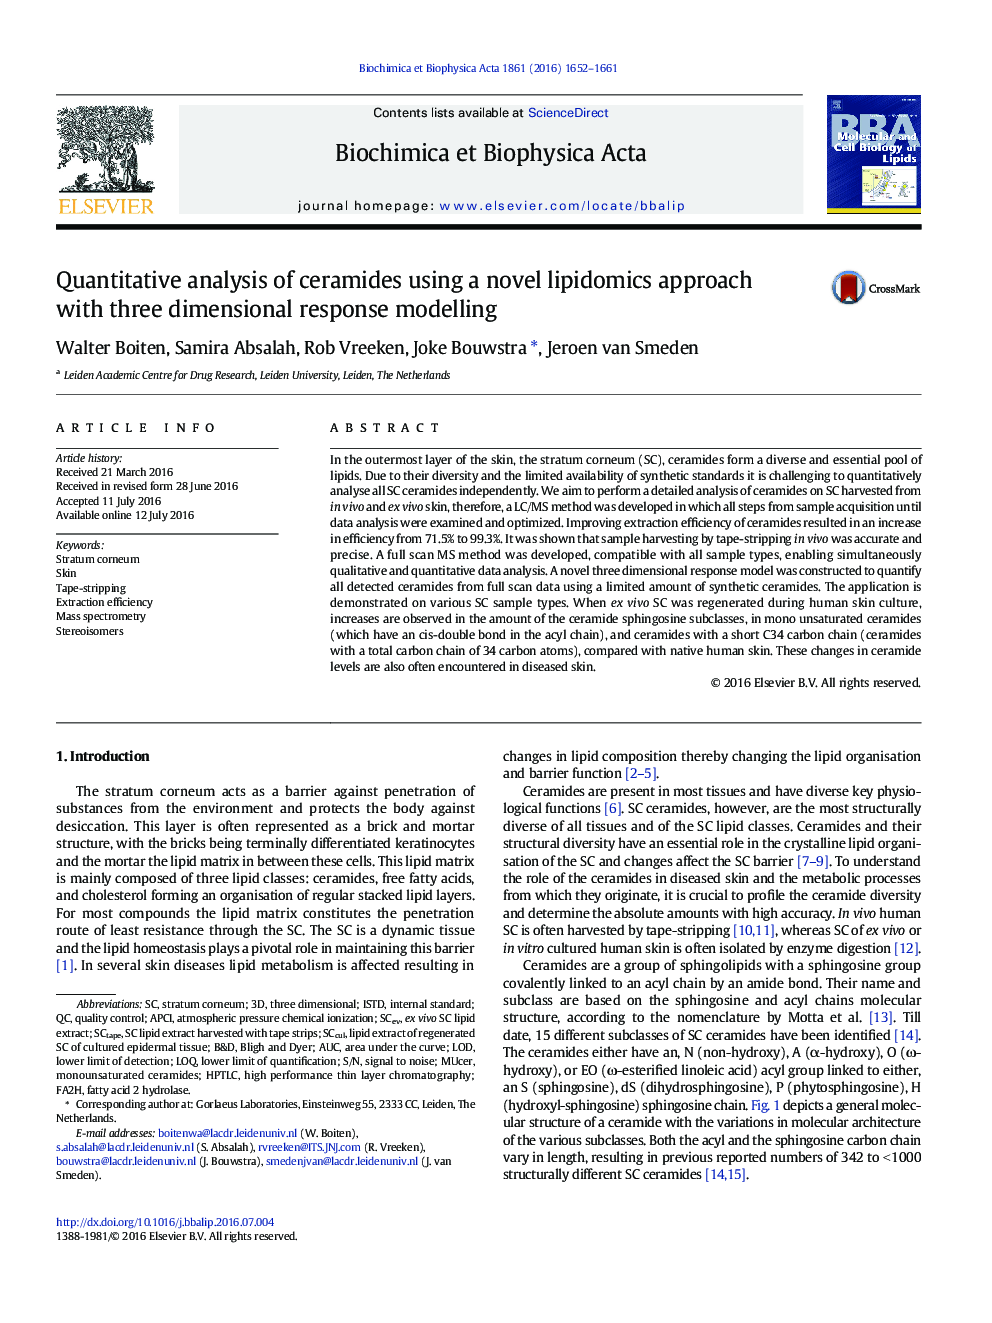 Quantitative analysis of ceramides using a novel lipidomics approach with three dimensional response modelling